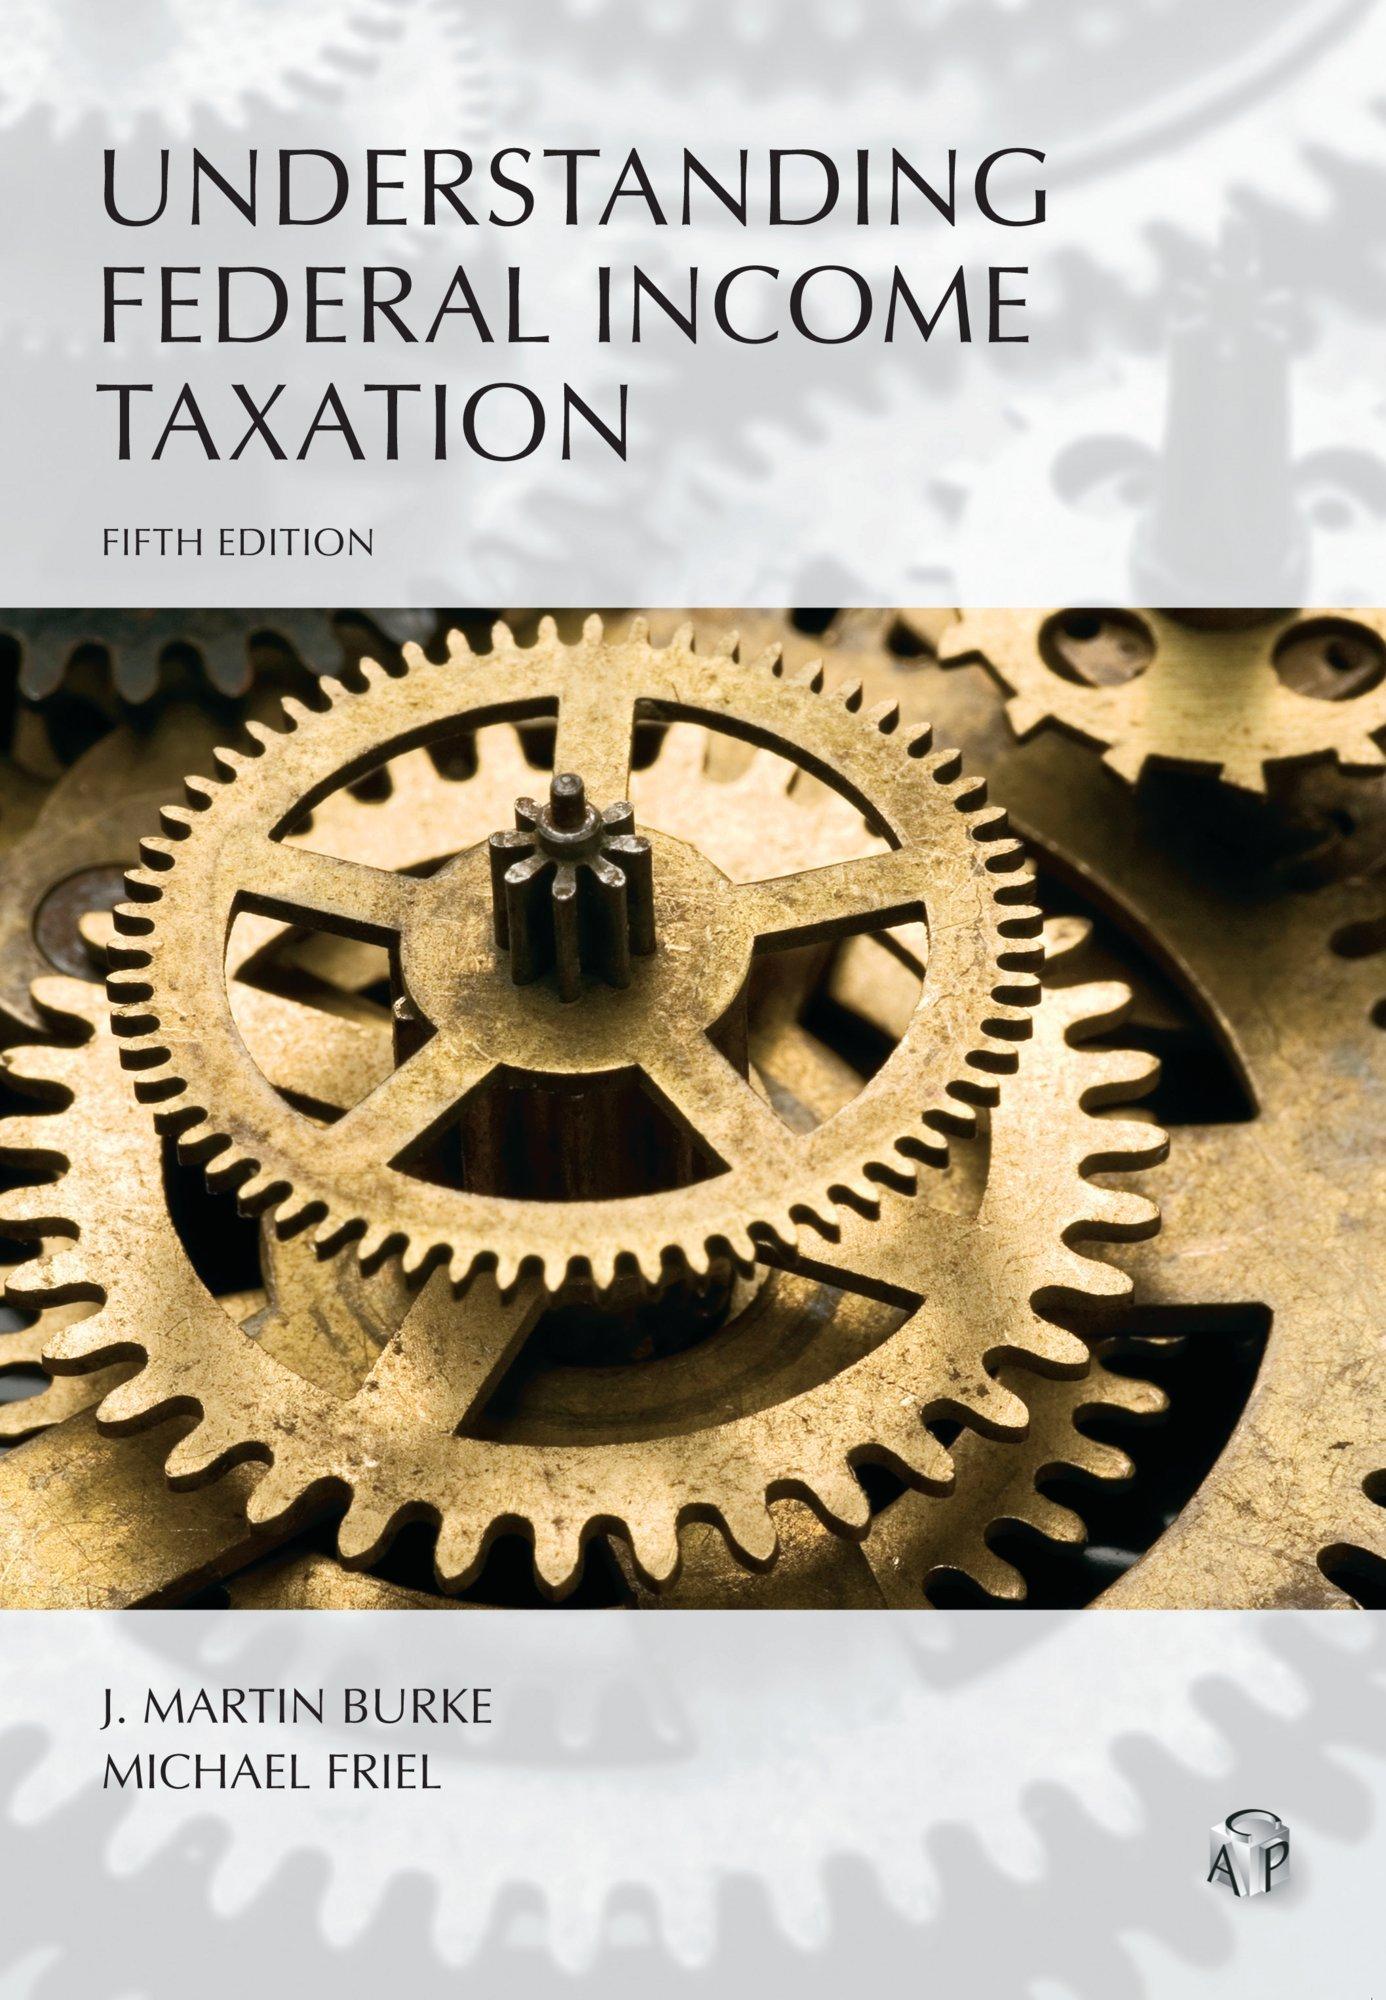 understanding federal income taxation 5th edition j. martin burke, michael friel 1522103481, 9781522103486